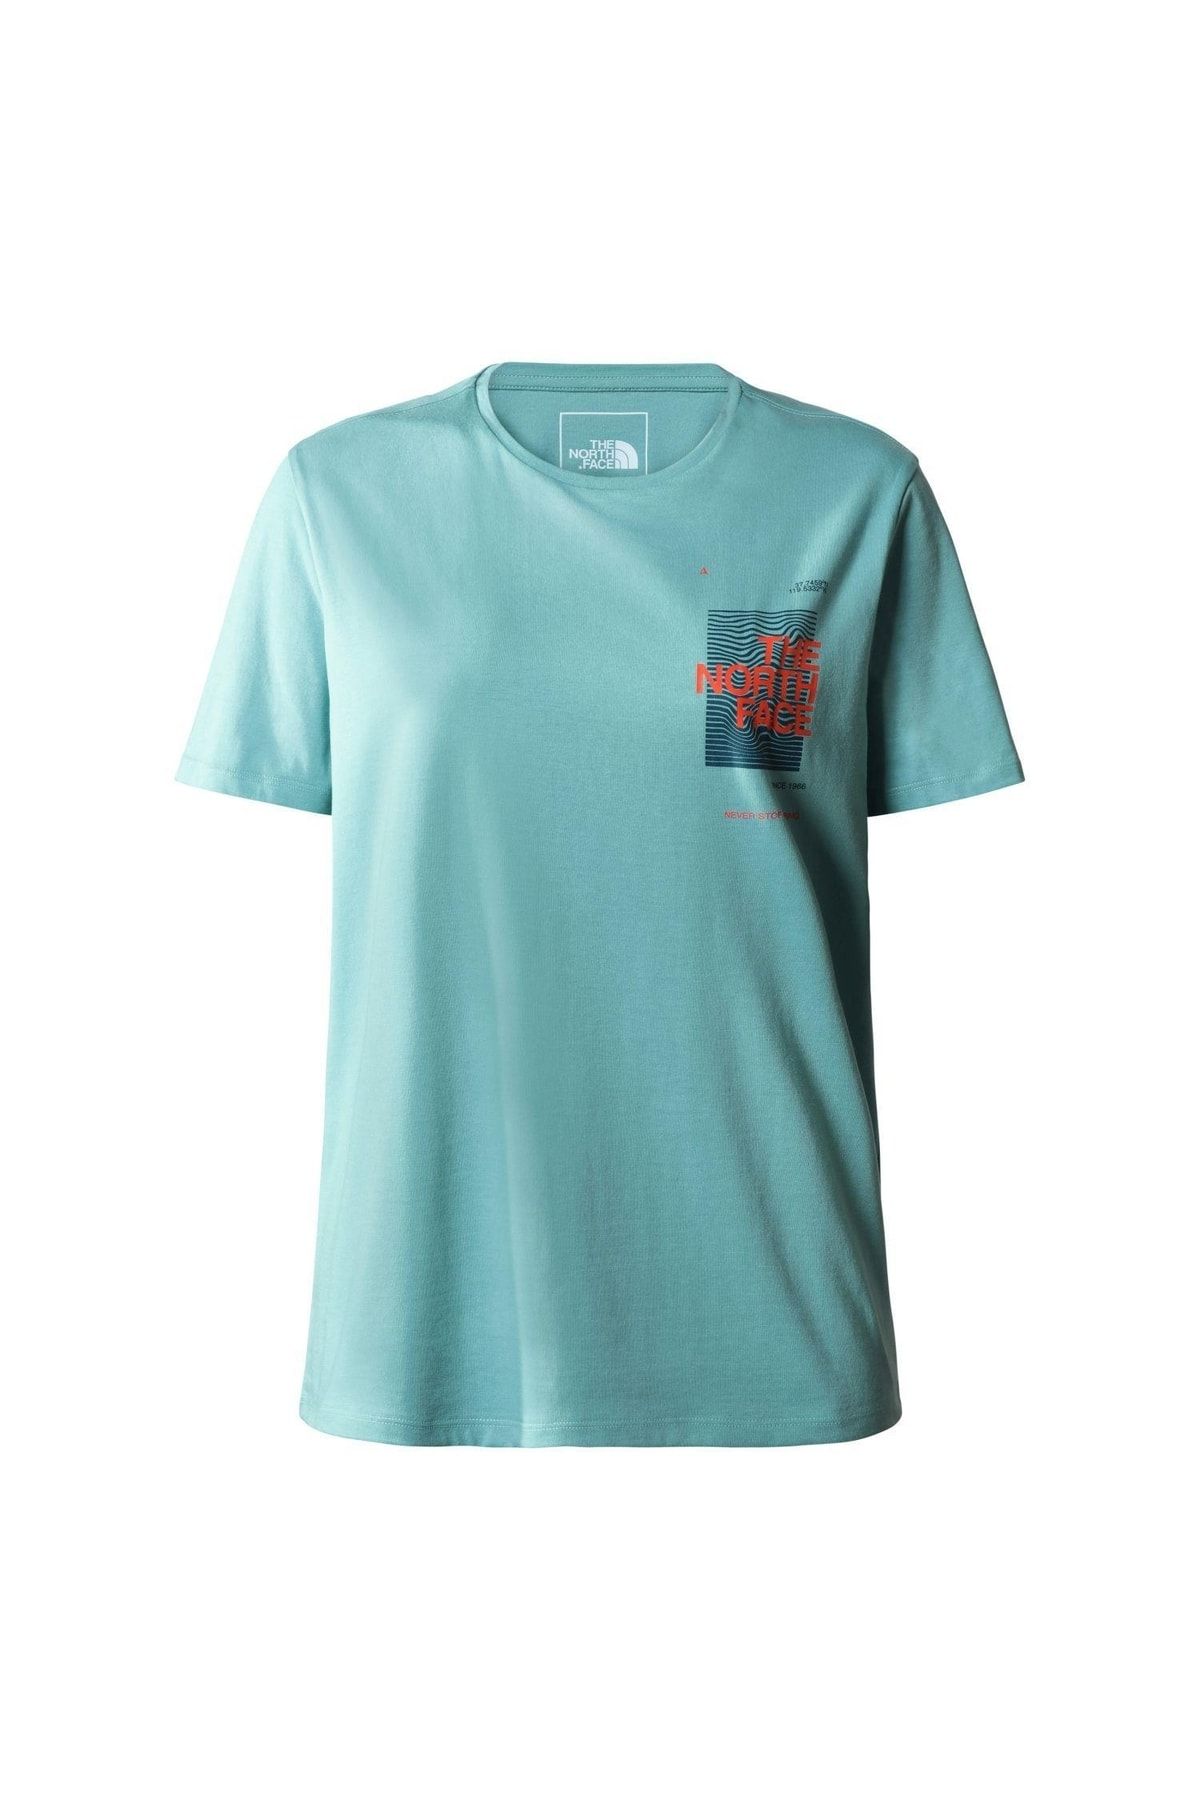 The North Face W Foundatıon Graphıc Tee - Eu Kadın T-shirt Nf0a55b2lv21